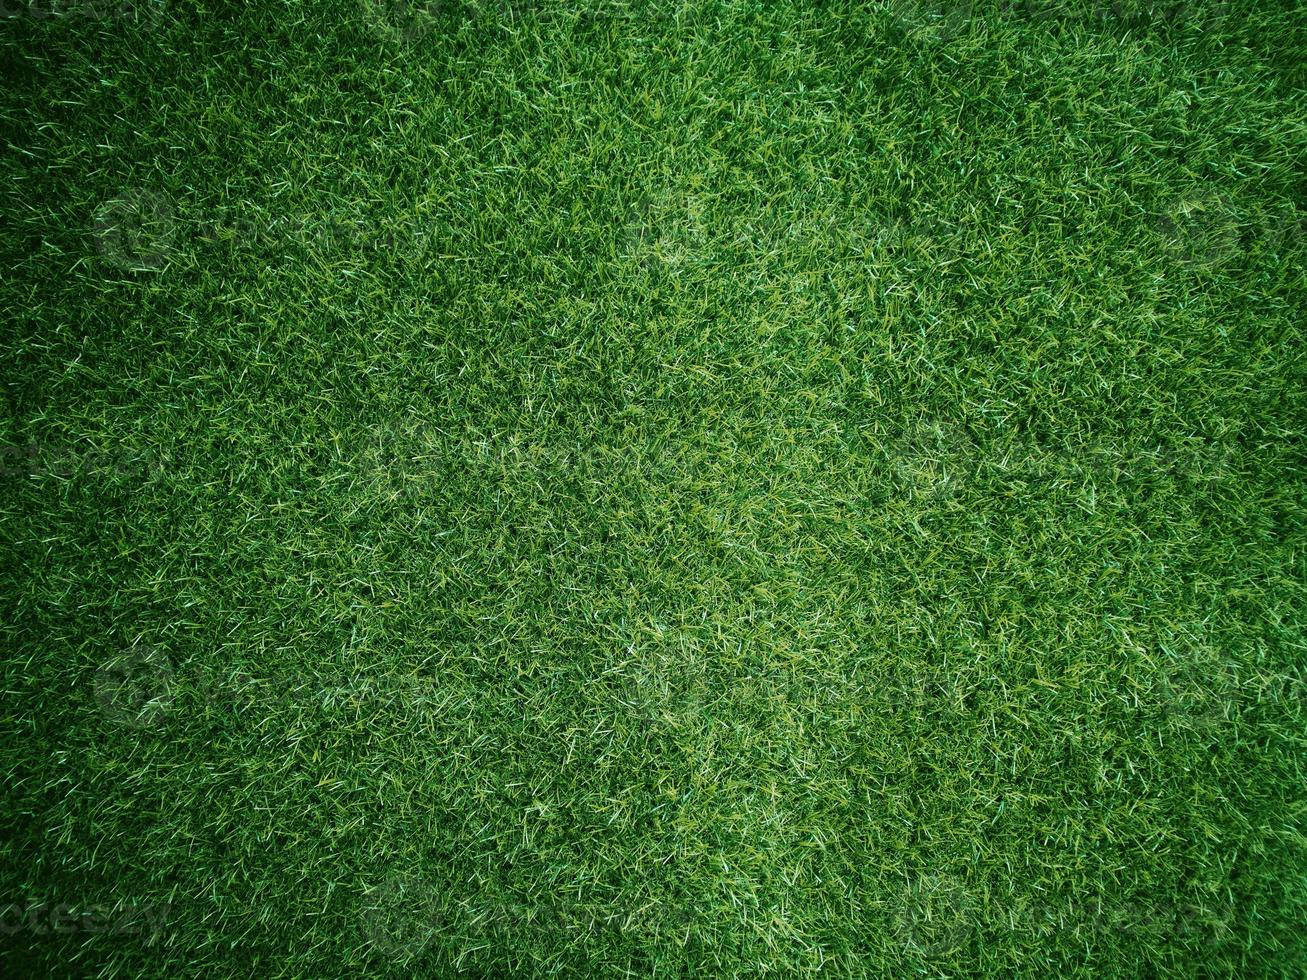 verde césped textura antecedentes césped jardín concepto usado para haciendo verde antecedentes fútbol americano paso, césped golf, verde césped modelo texturizado fondo... foto